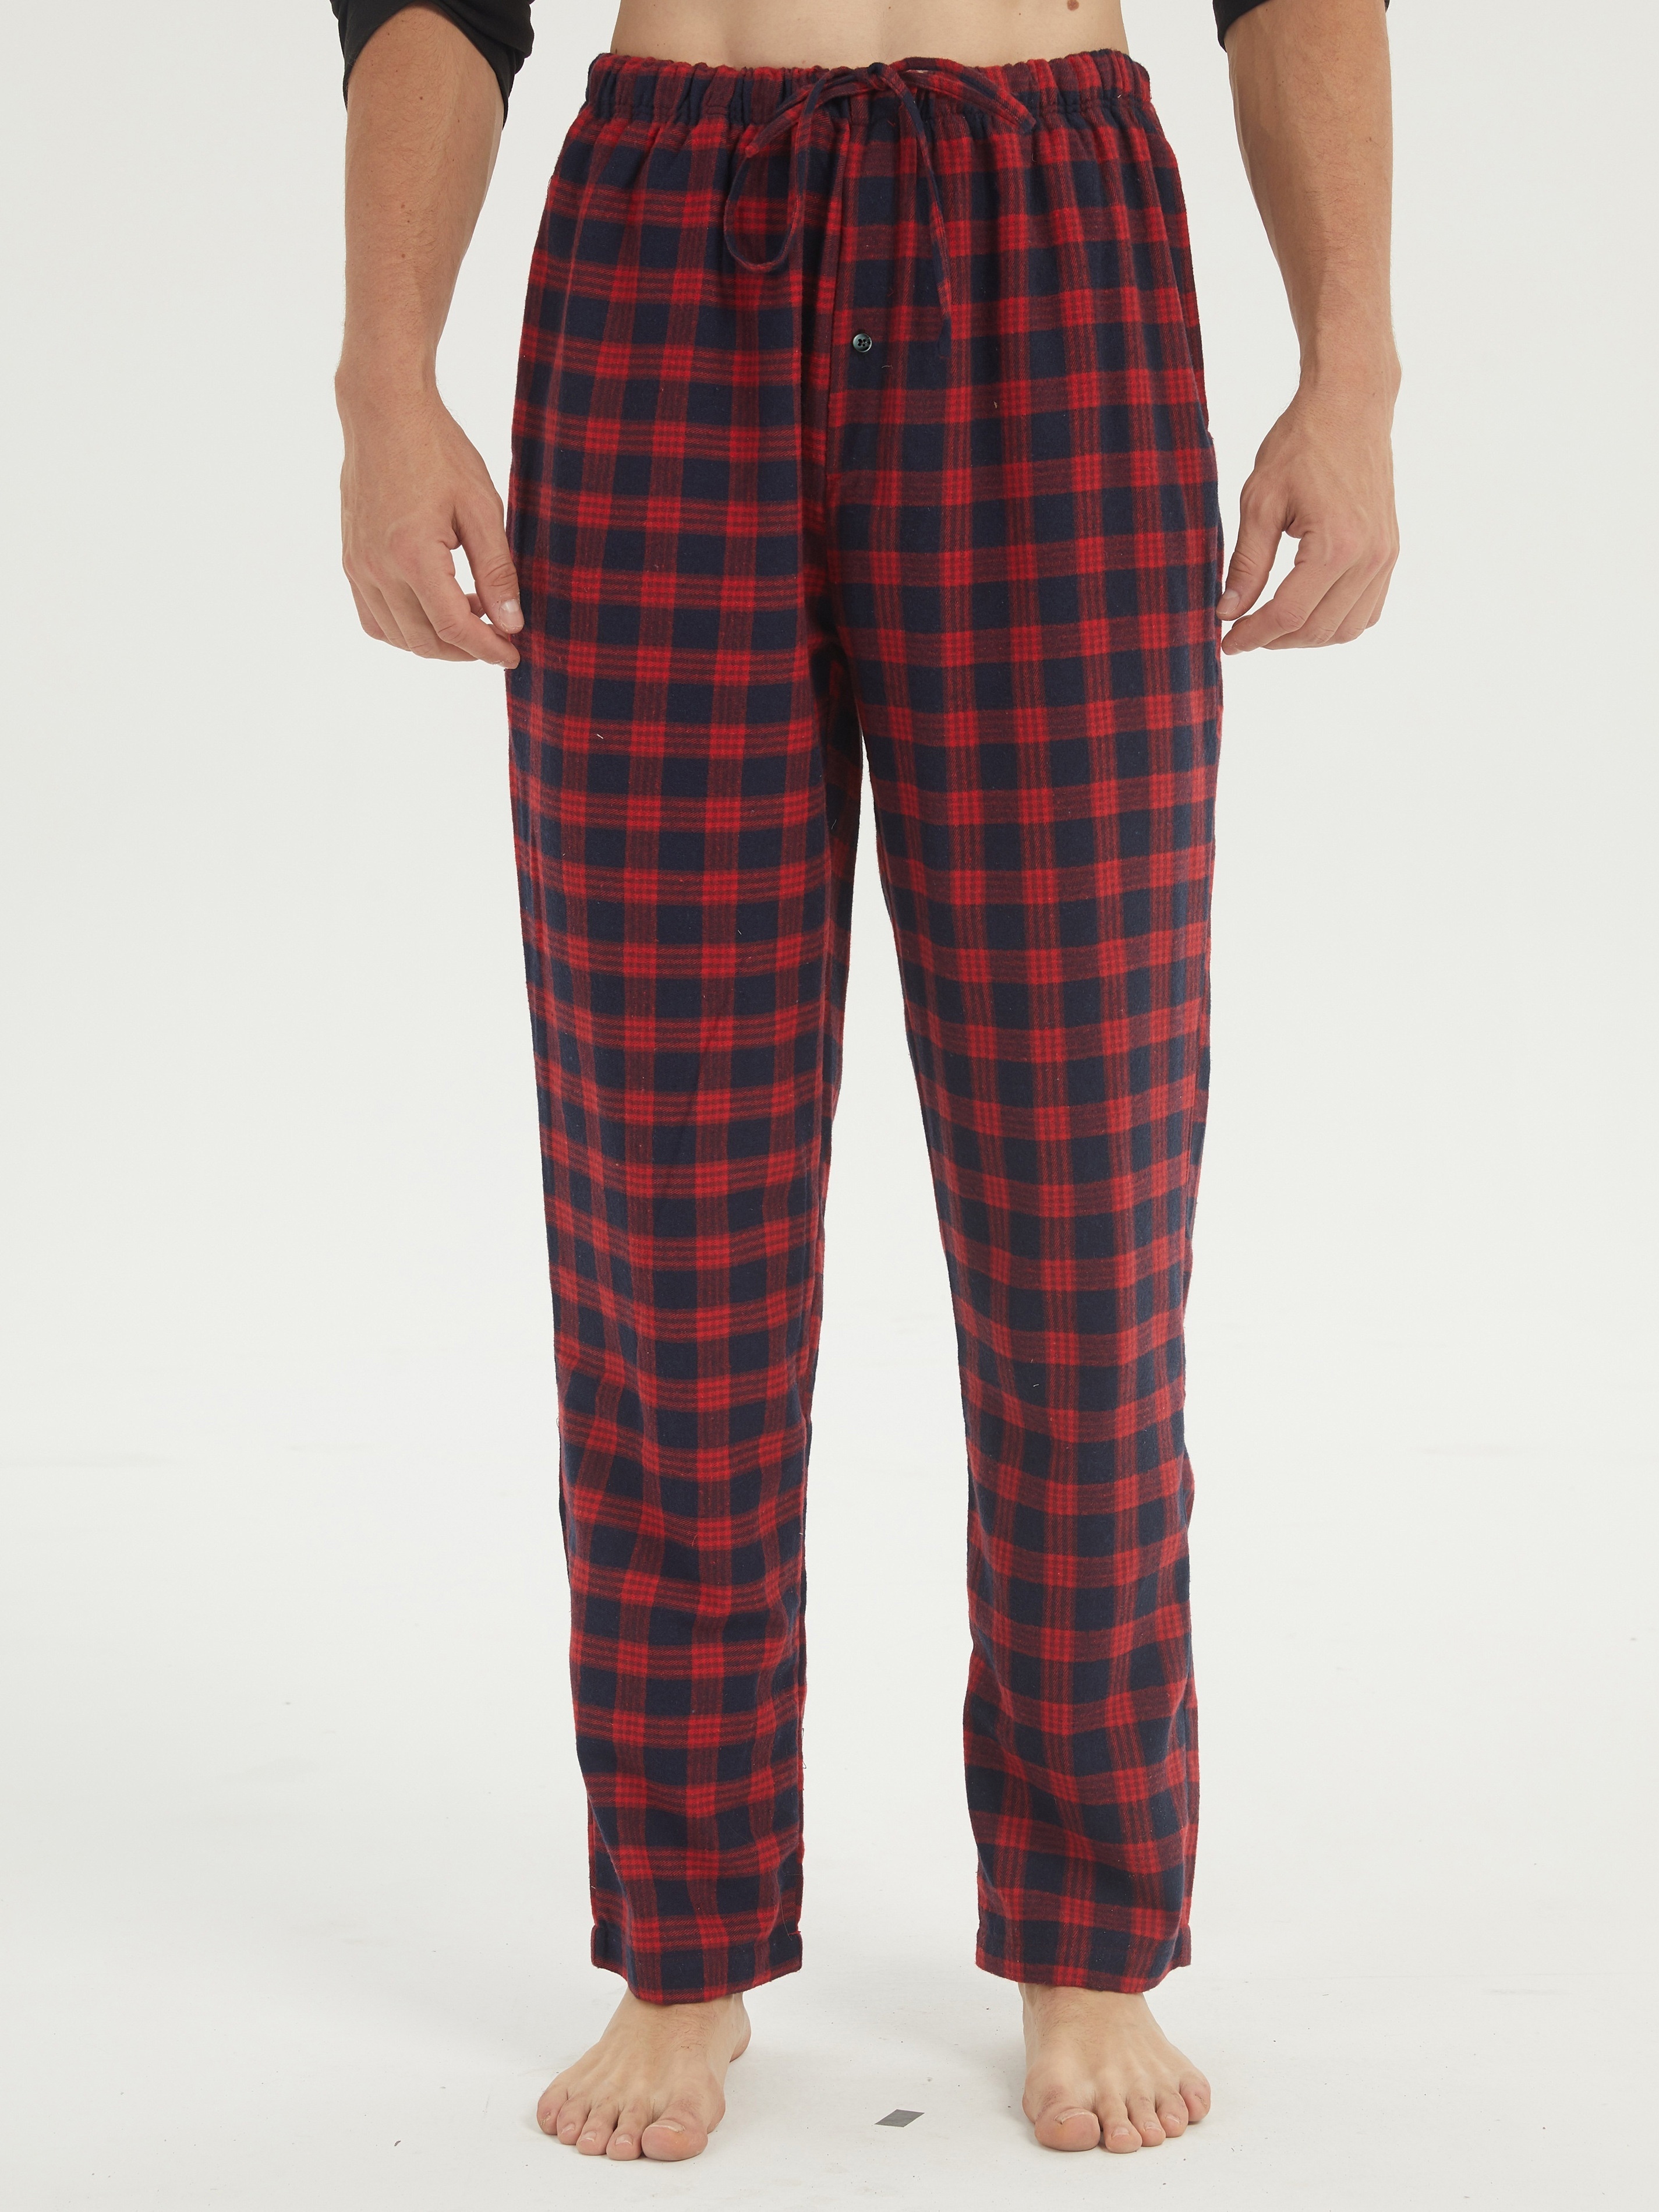 Women Cotton Plaid Pajama Pants Sleepwear, Lounge Pants With Pockets, Sleep  Bottoms